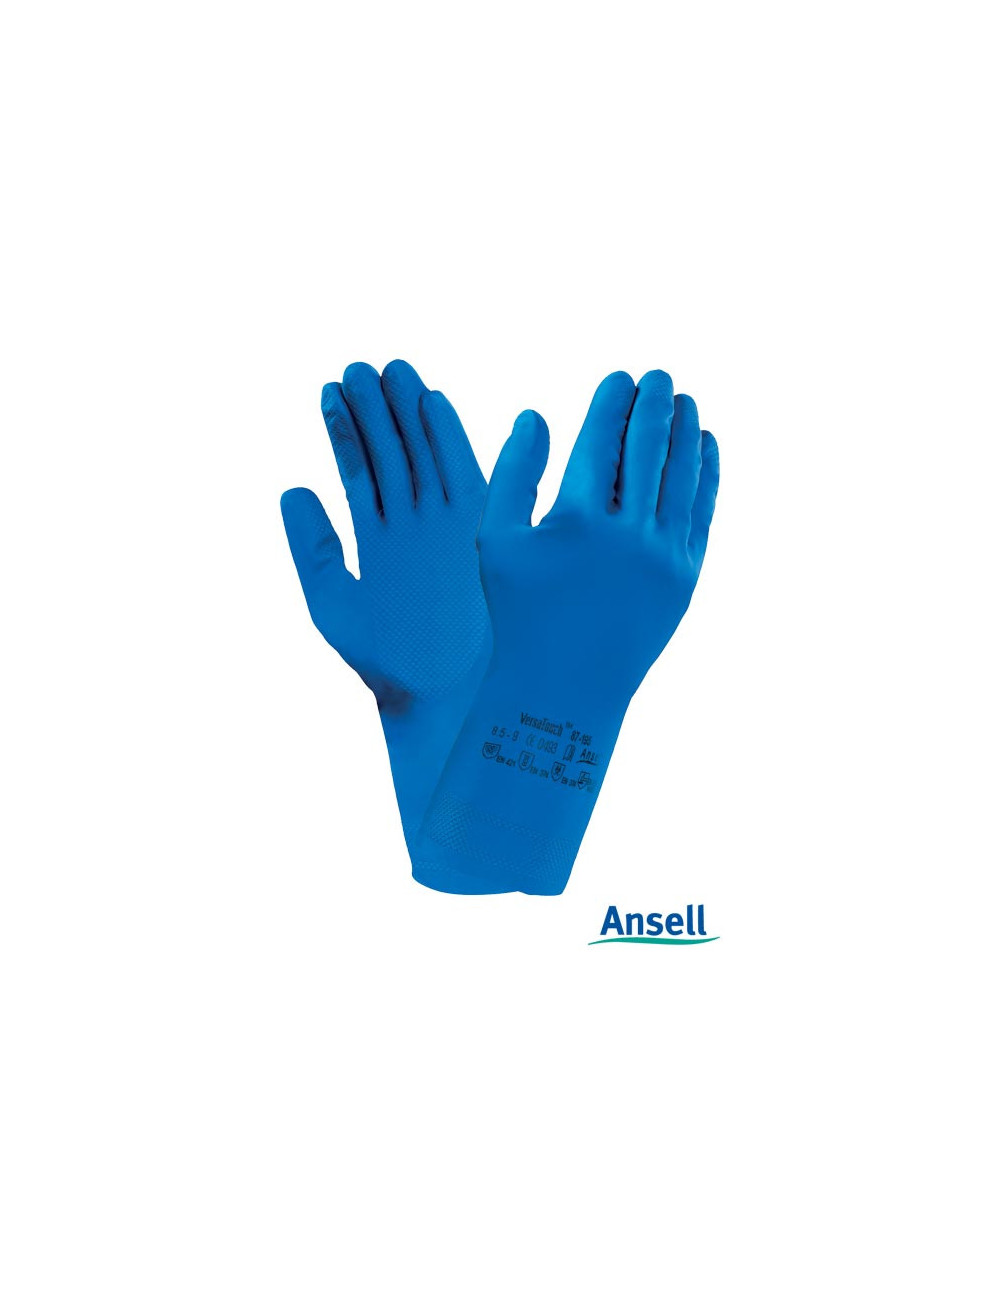 Rękawice ochronne raversat87-195 n niebieski Ansell